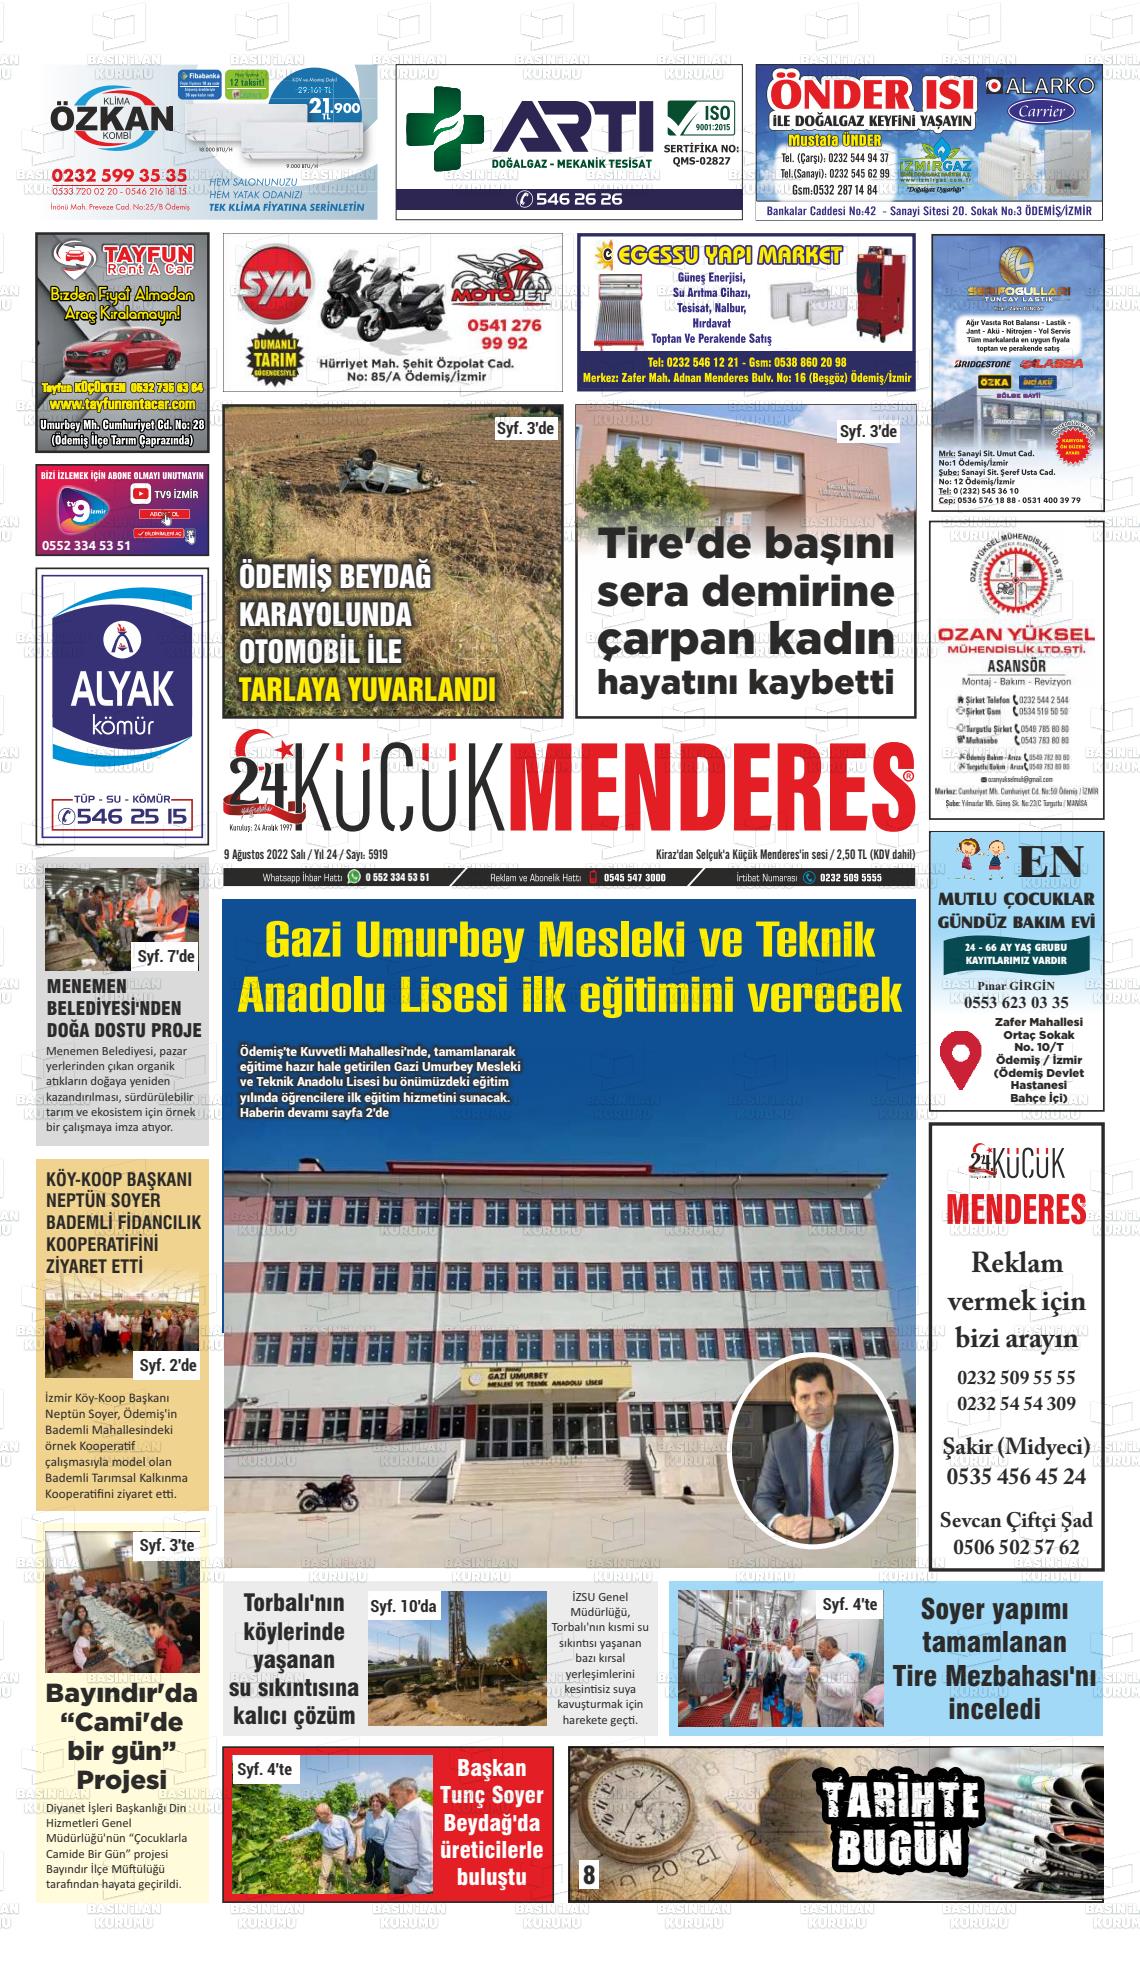 09 Ağustos 2022 Küçük Menderes Gazete Manşeti